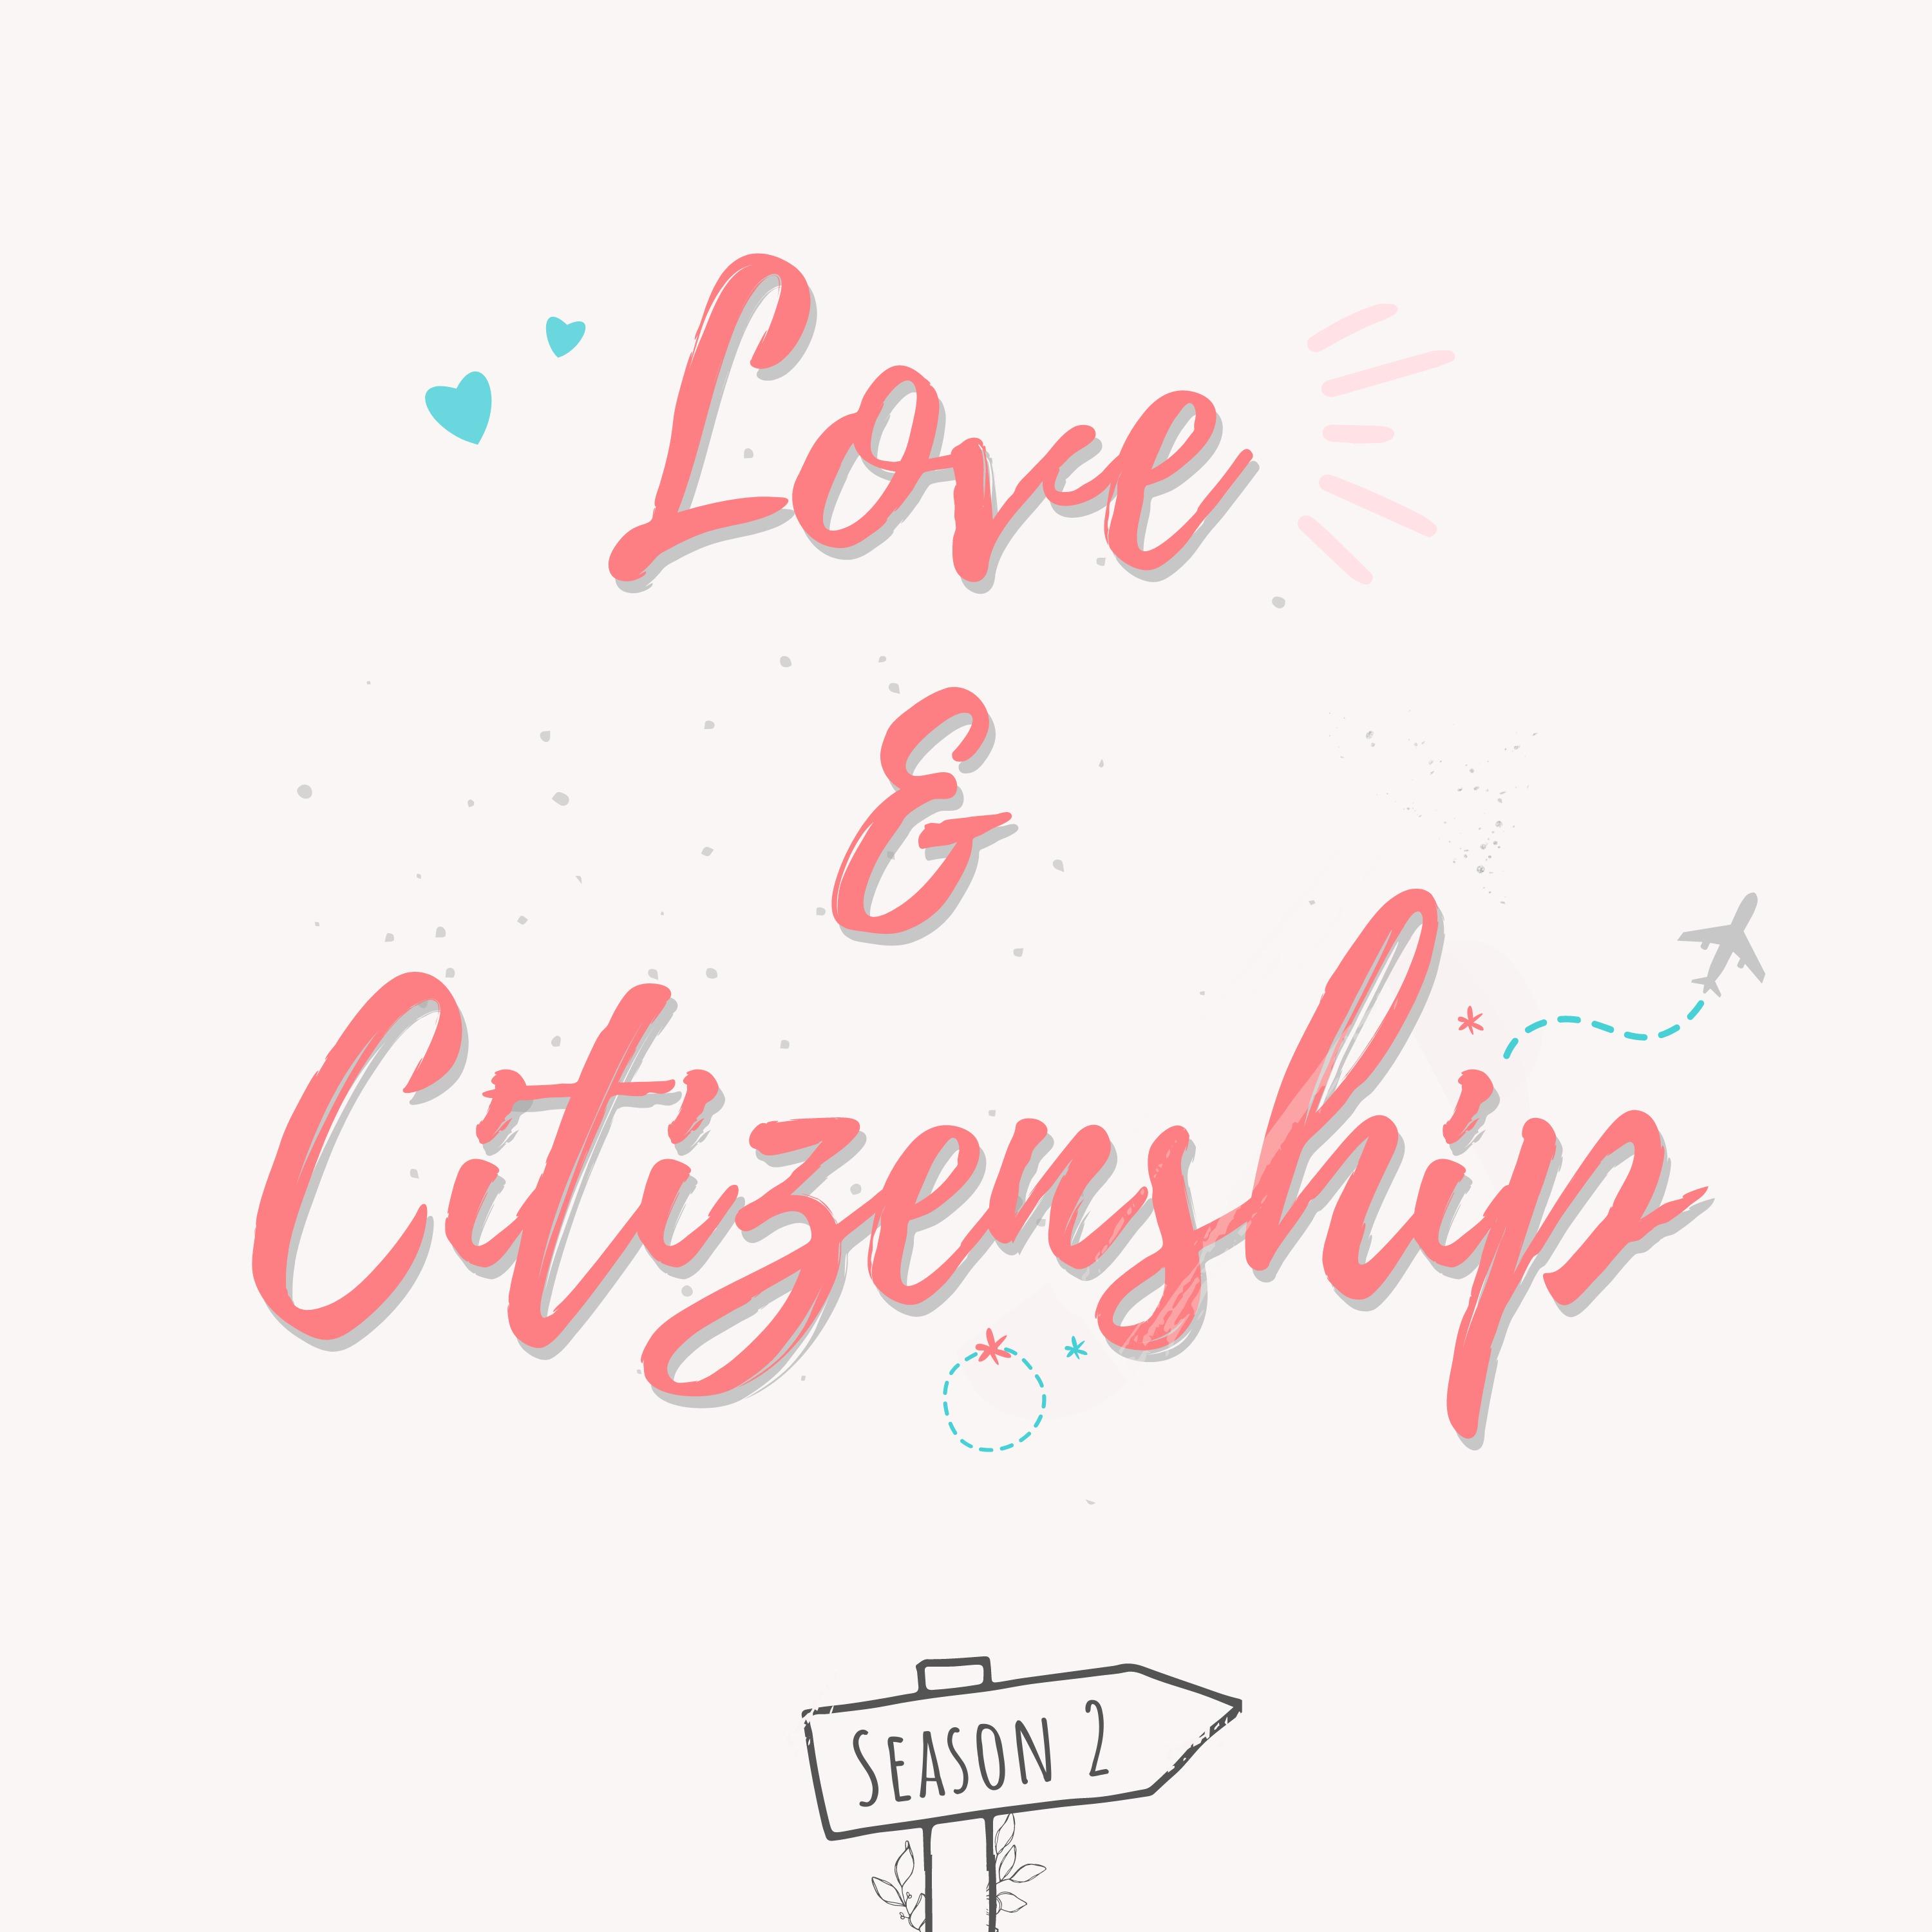 Love & Citizenship